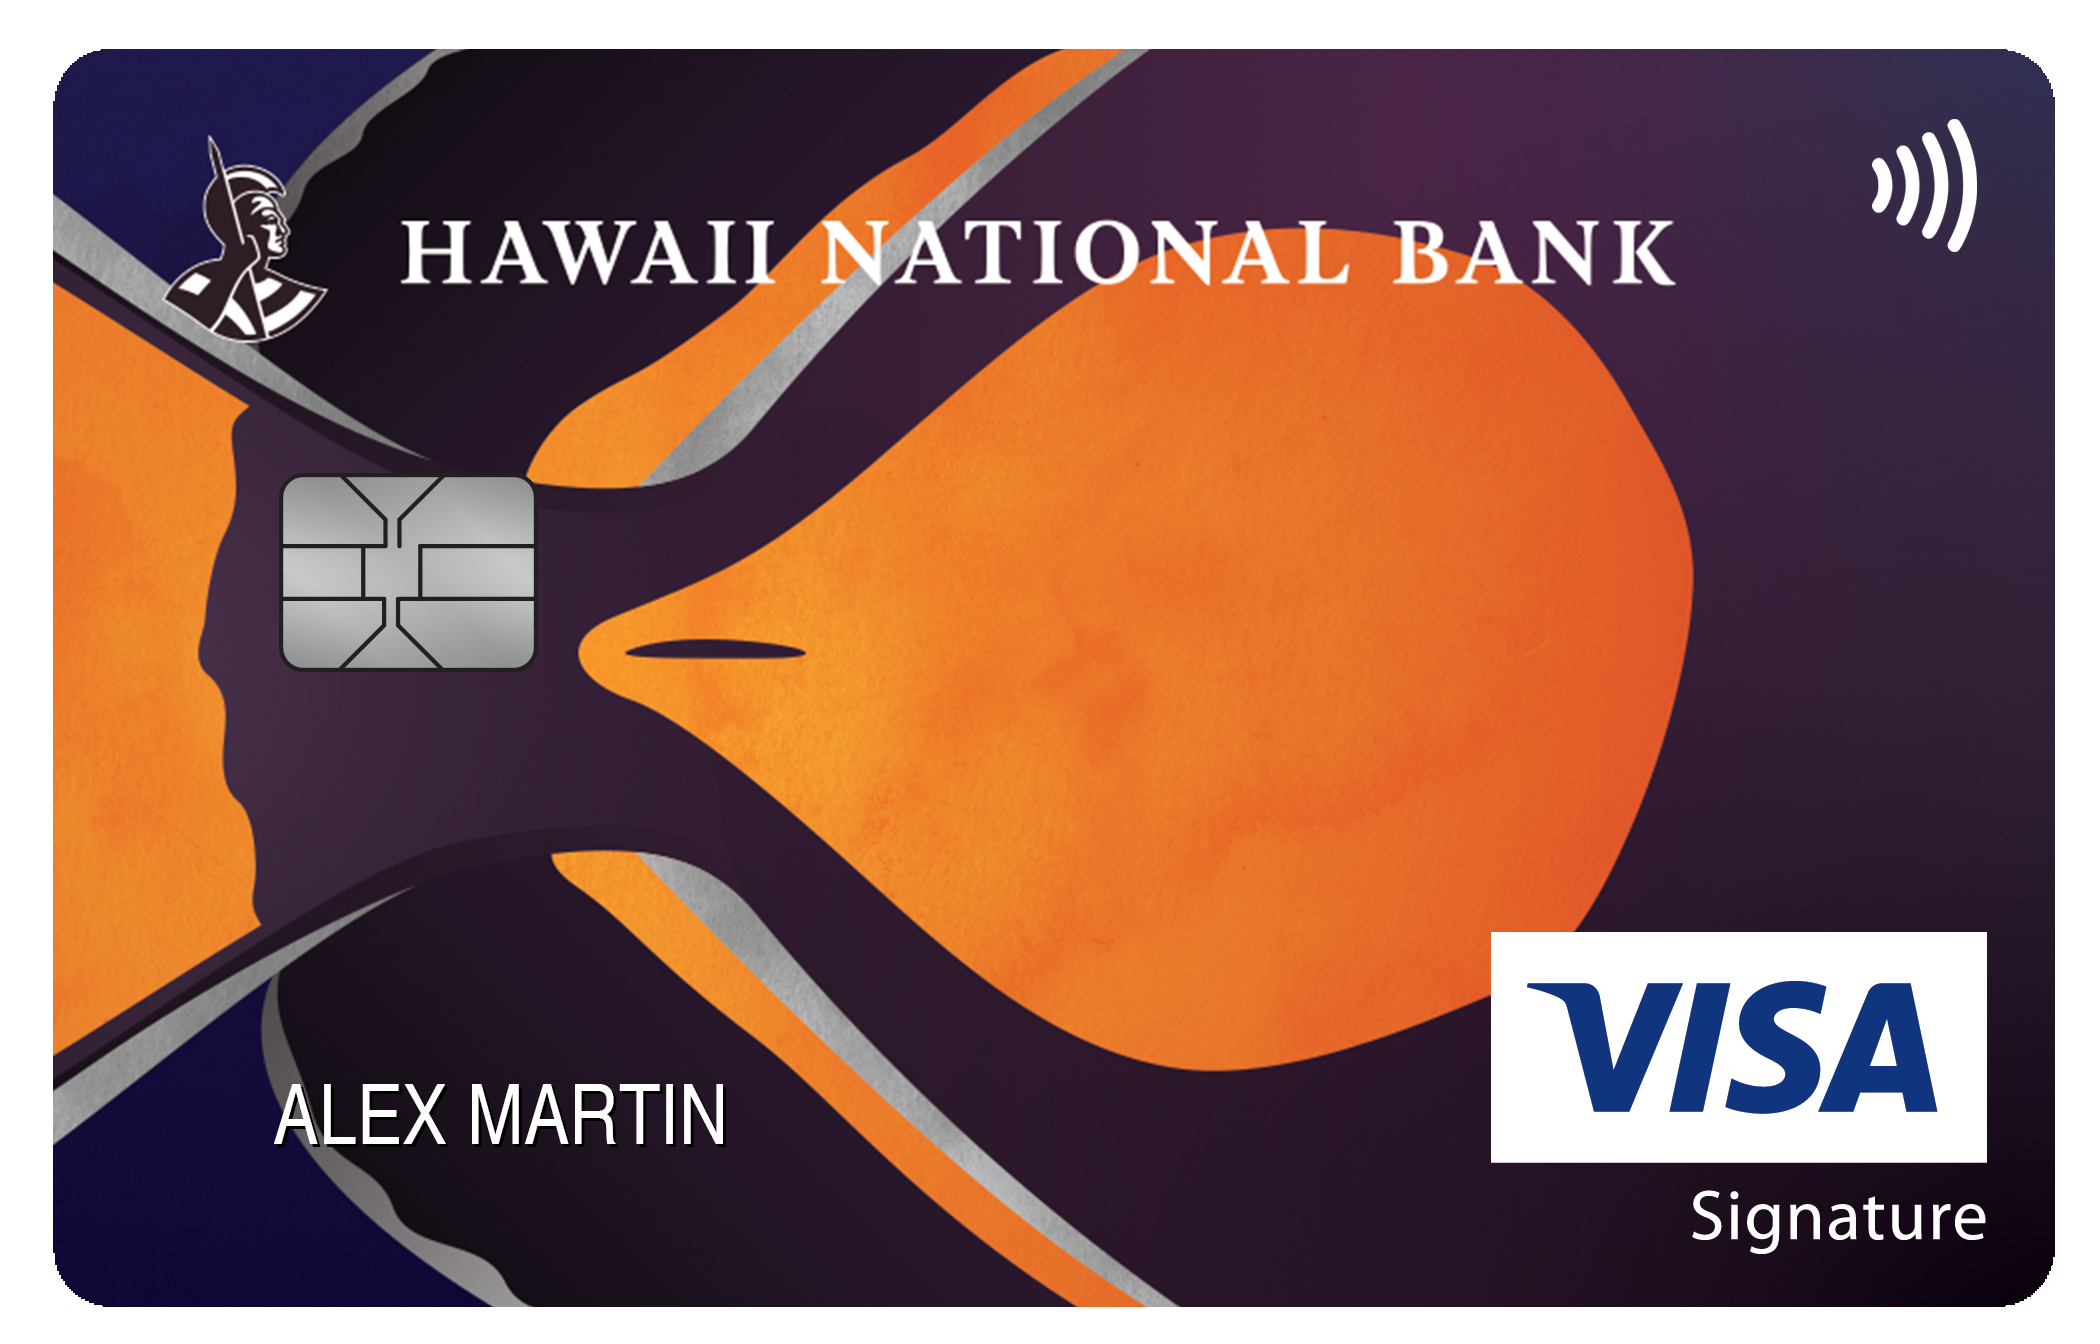 Hawaii National Bank Travel Rewards+ Card